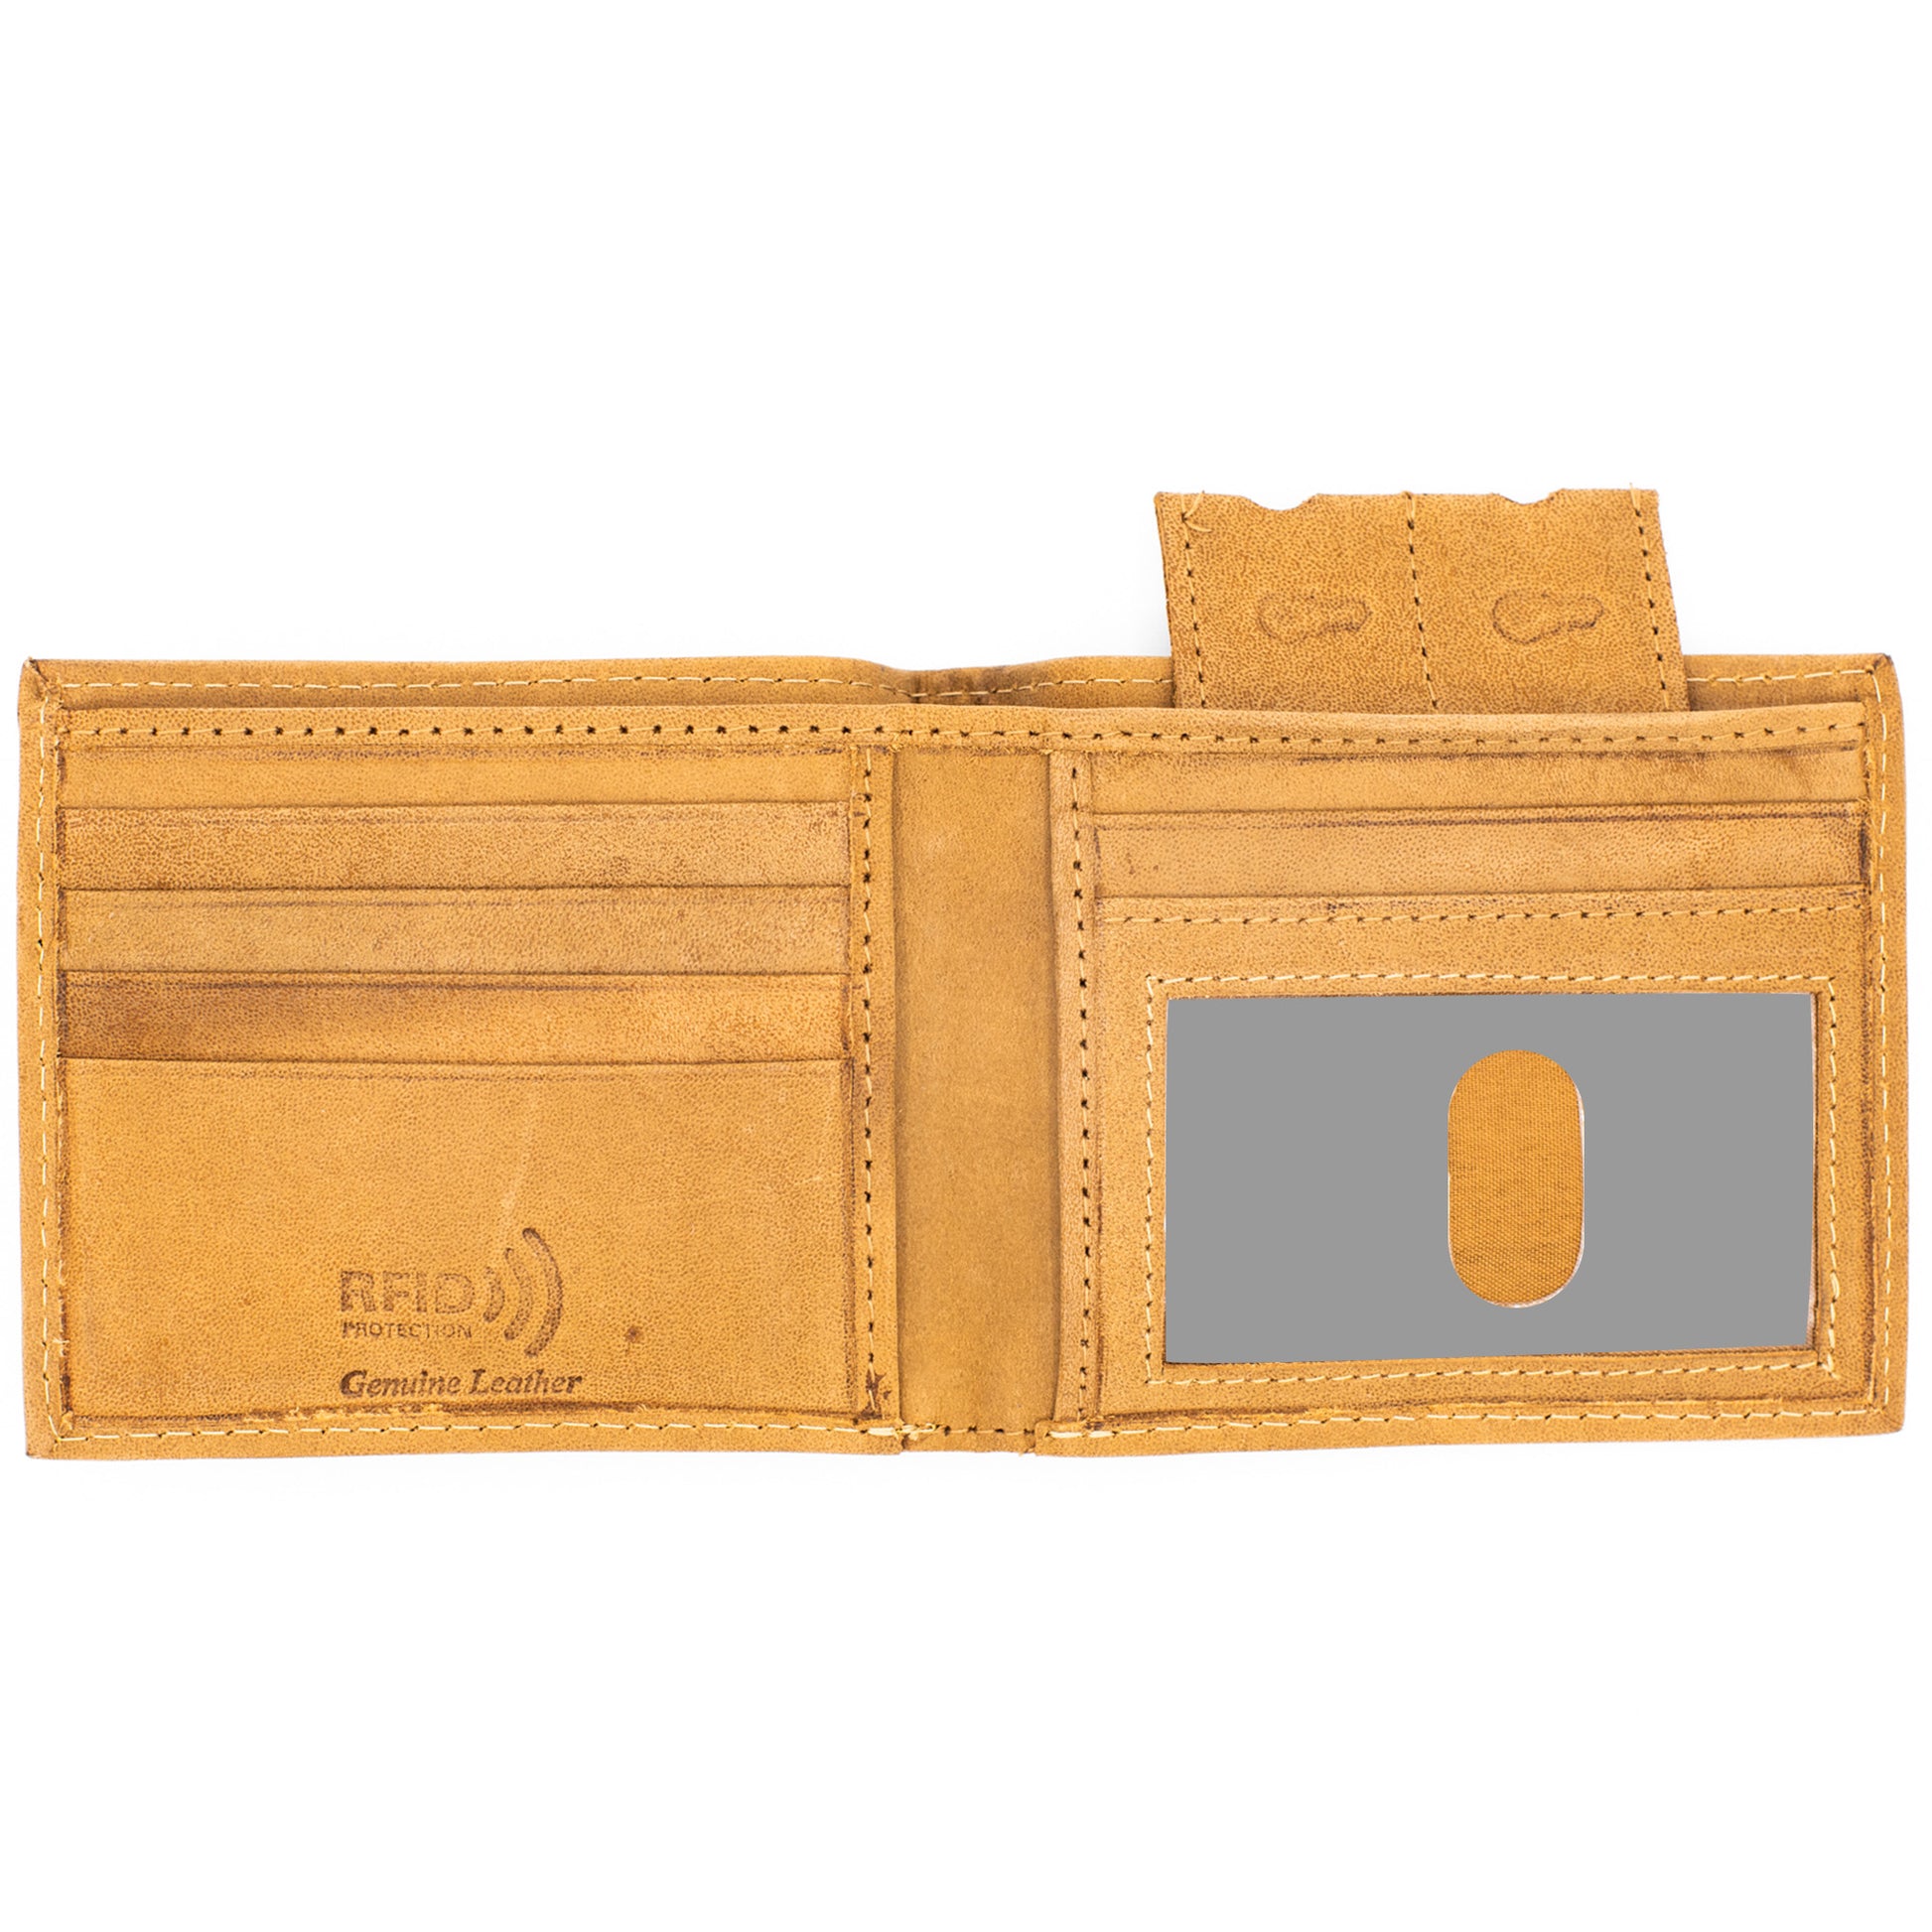 Timberland Men's Genuine Leather RFID Blocking Trifold Wallet Brown